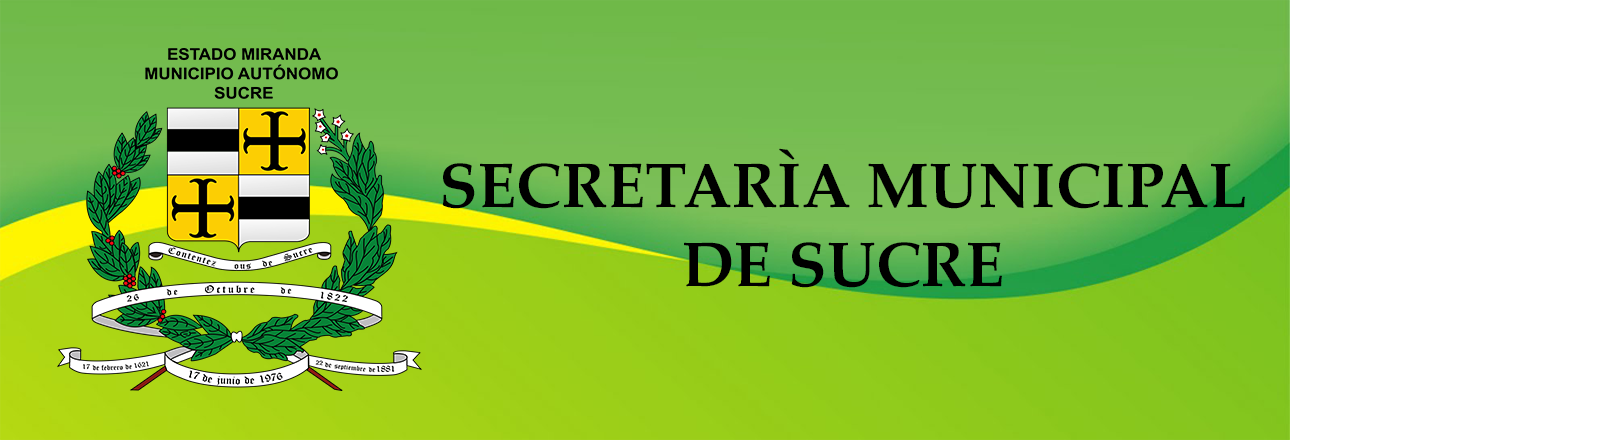 Secretaria Del Concejo Municipal de Sucre